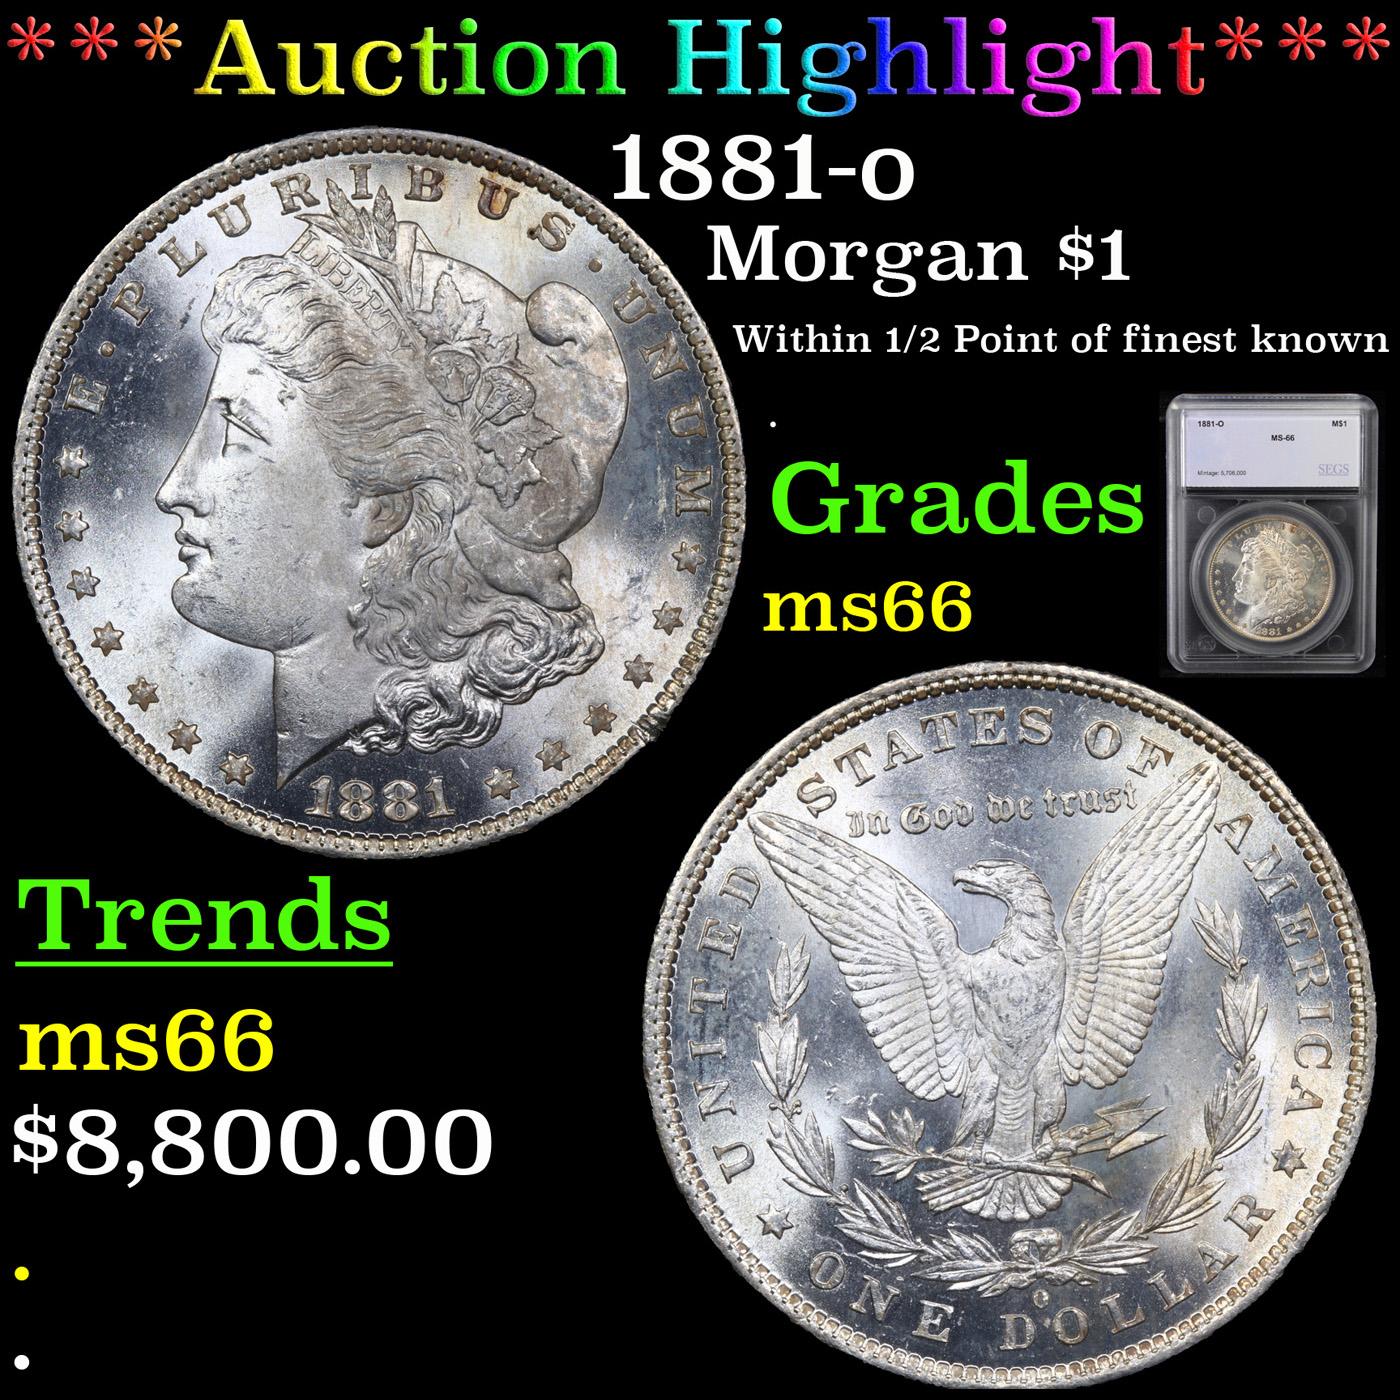 ***Auction Highlight*** 1881-o Morgan Dollar $1 Graded ms66 By SEGS (fc)